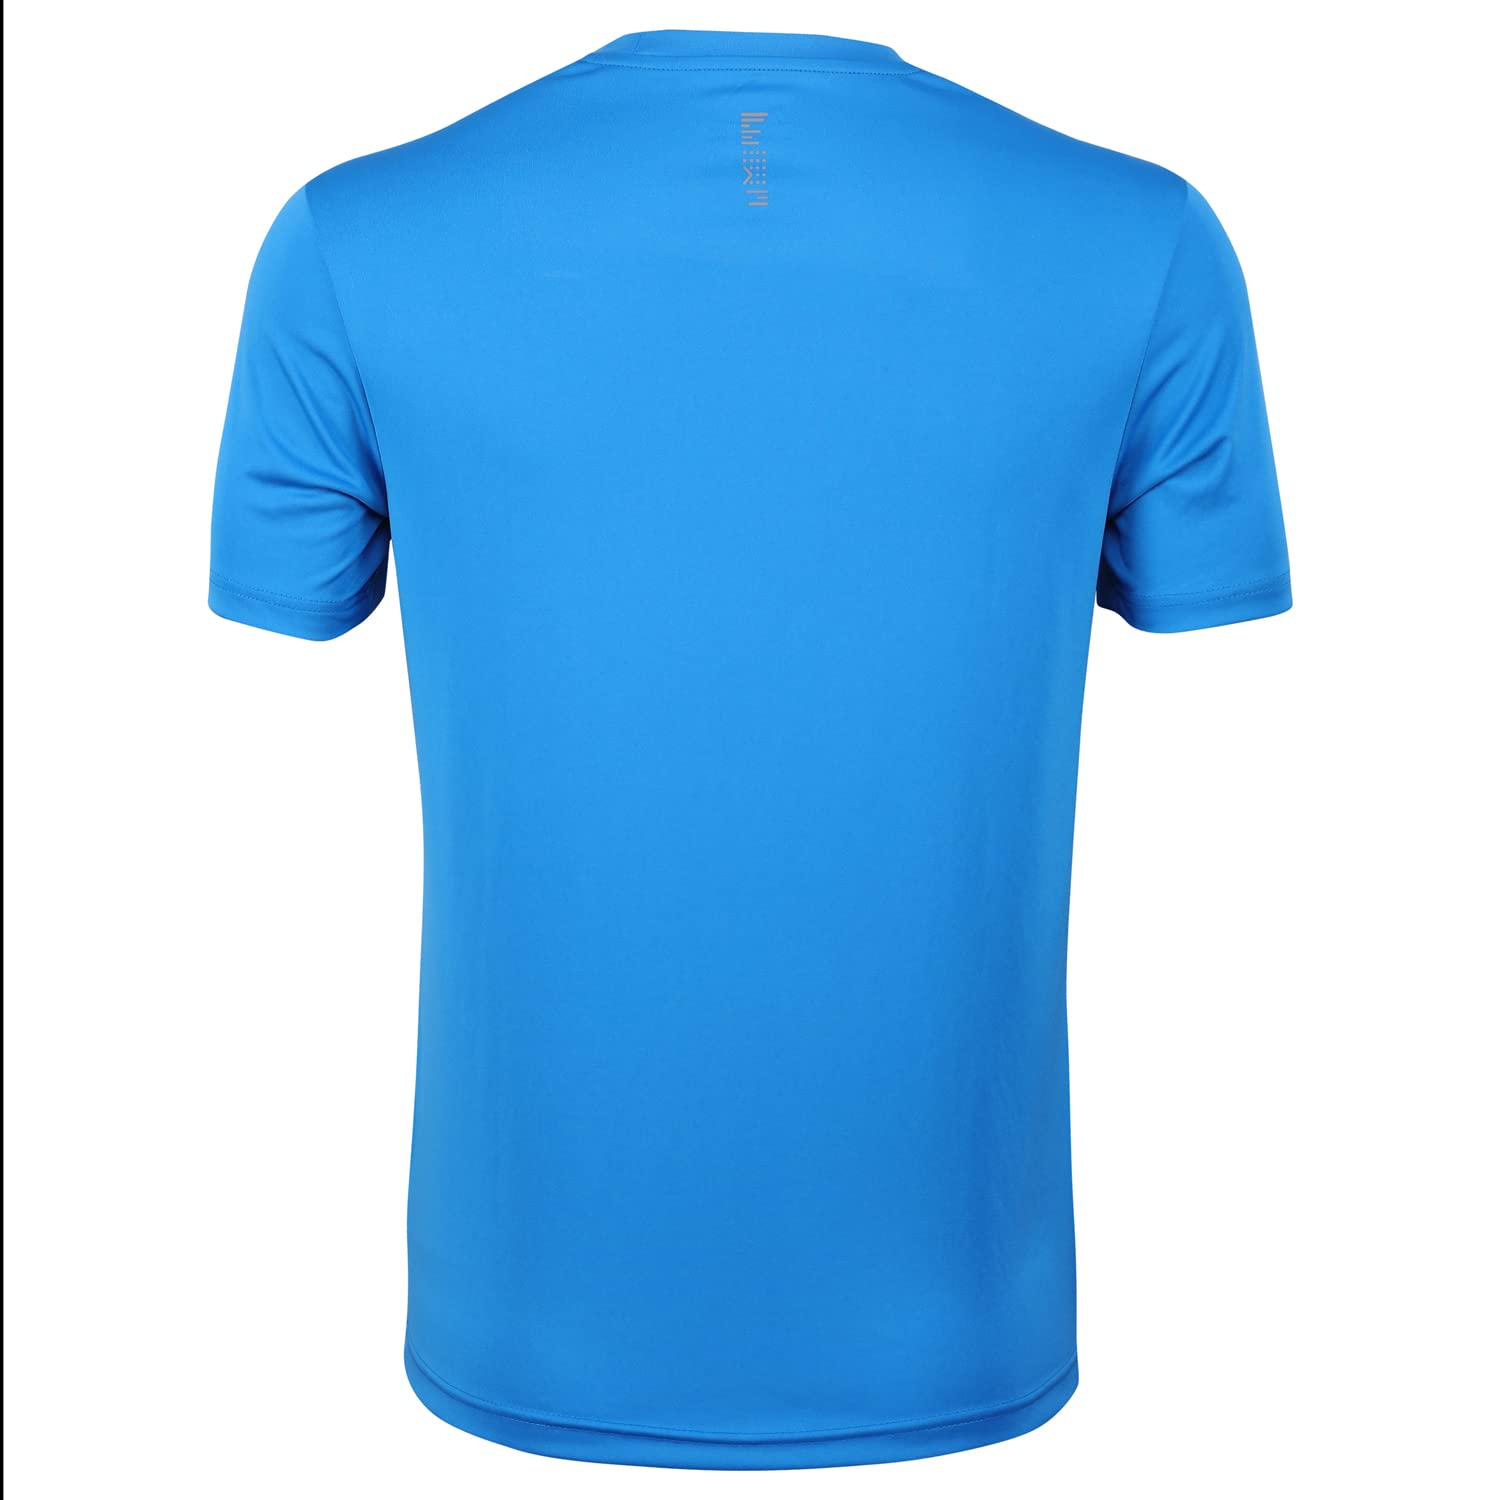 Yonex Round Neck Badminton T Shirt - Diva Blue - Best Price online Prokicksports.com